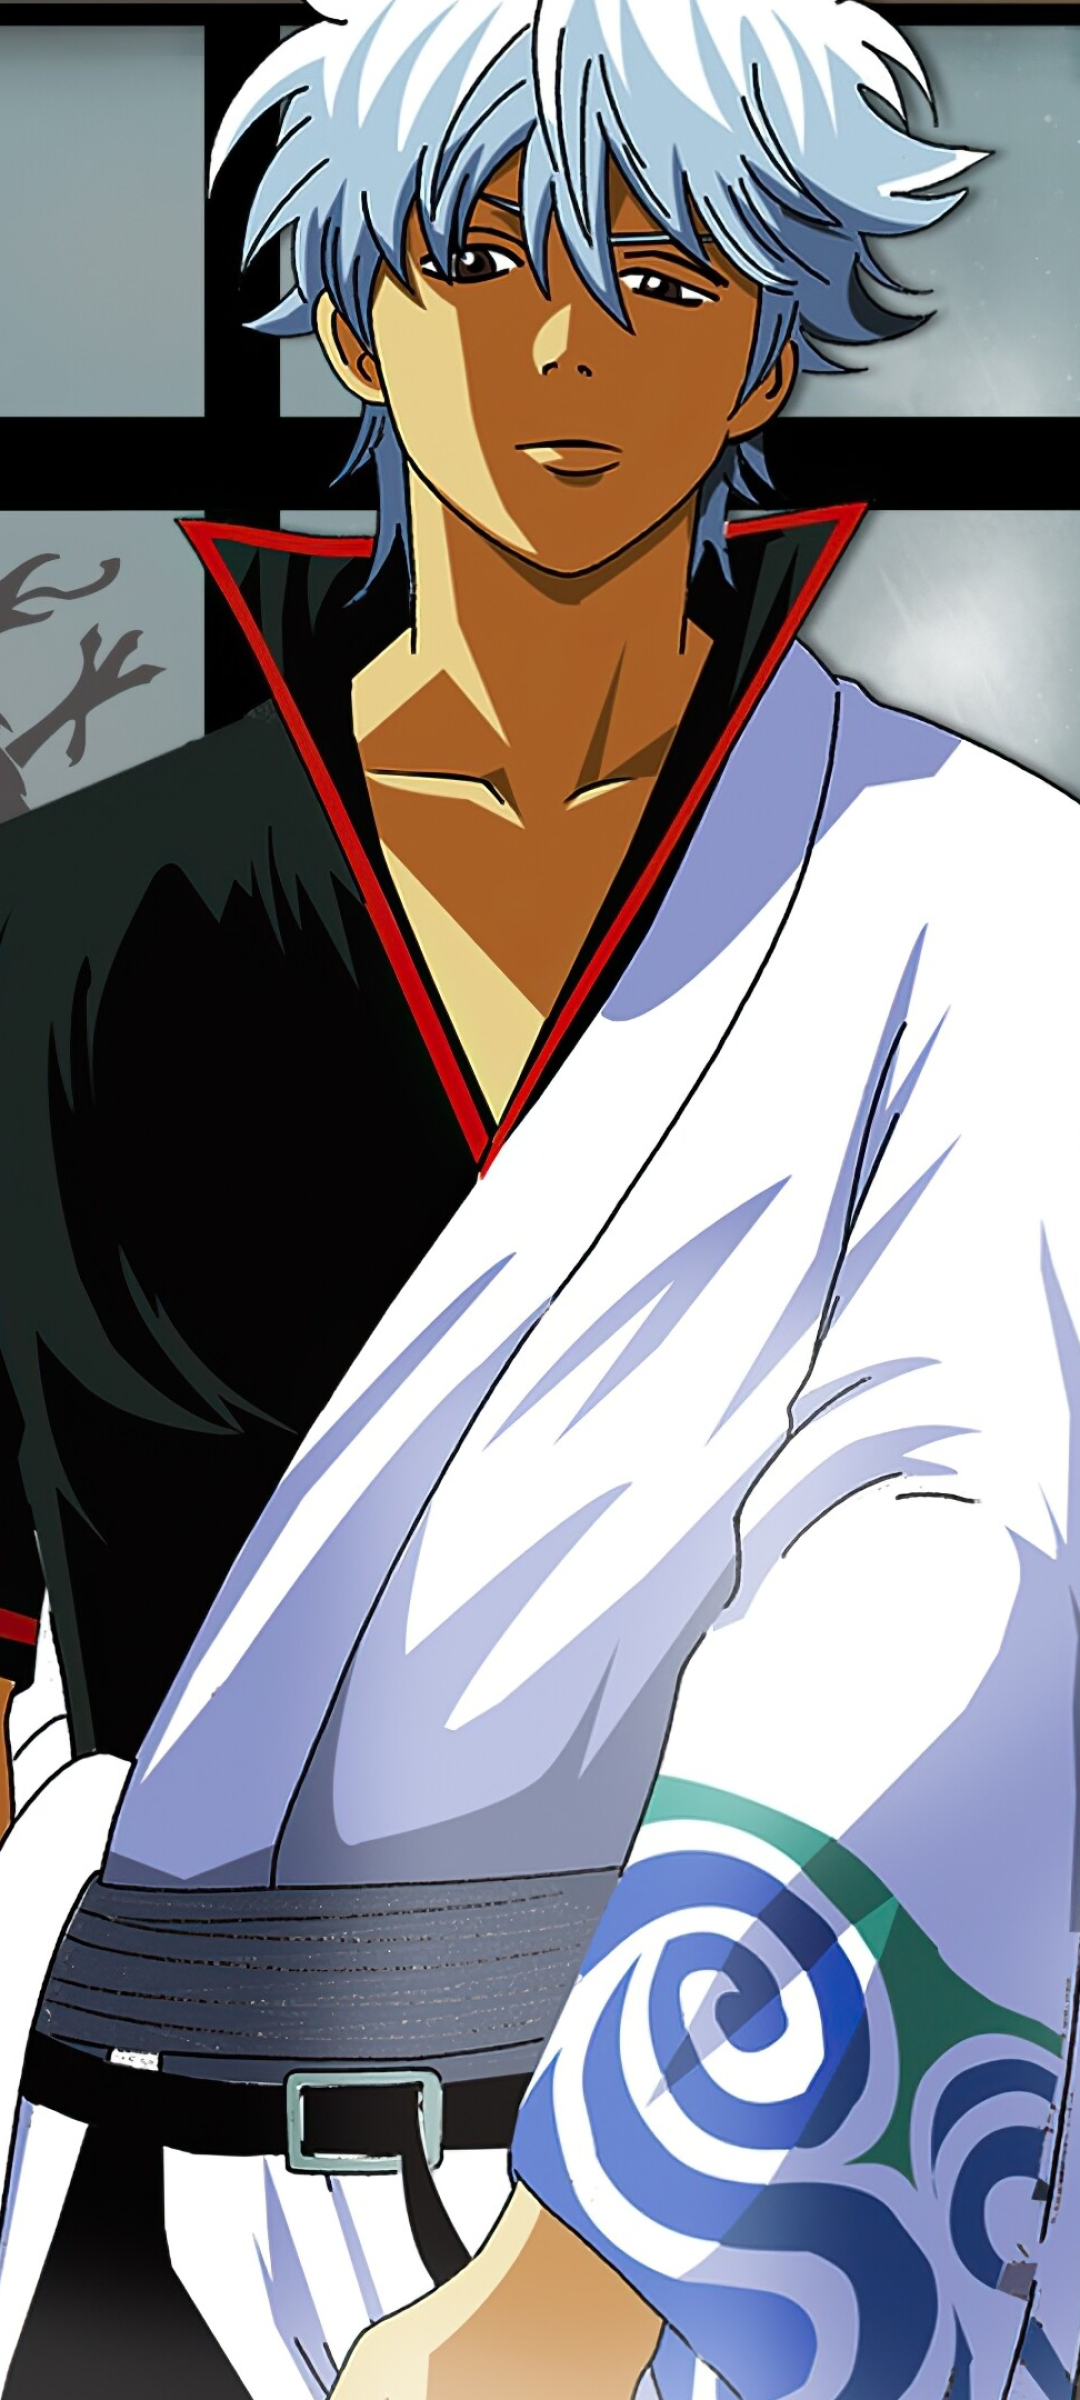 Gintoki Sakata: Anime Gintama, Gintoki's physical strength, Extreme level of endurance, A highly-skilled samurai. 1080x2400 HD Wallpaper.